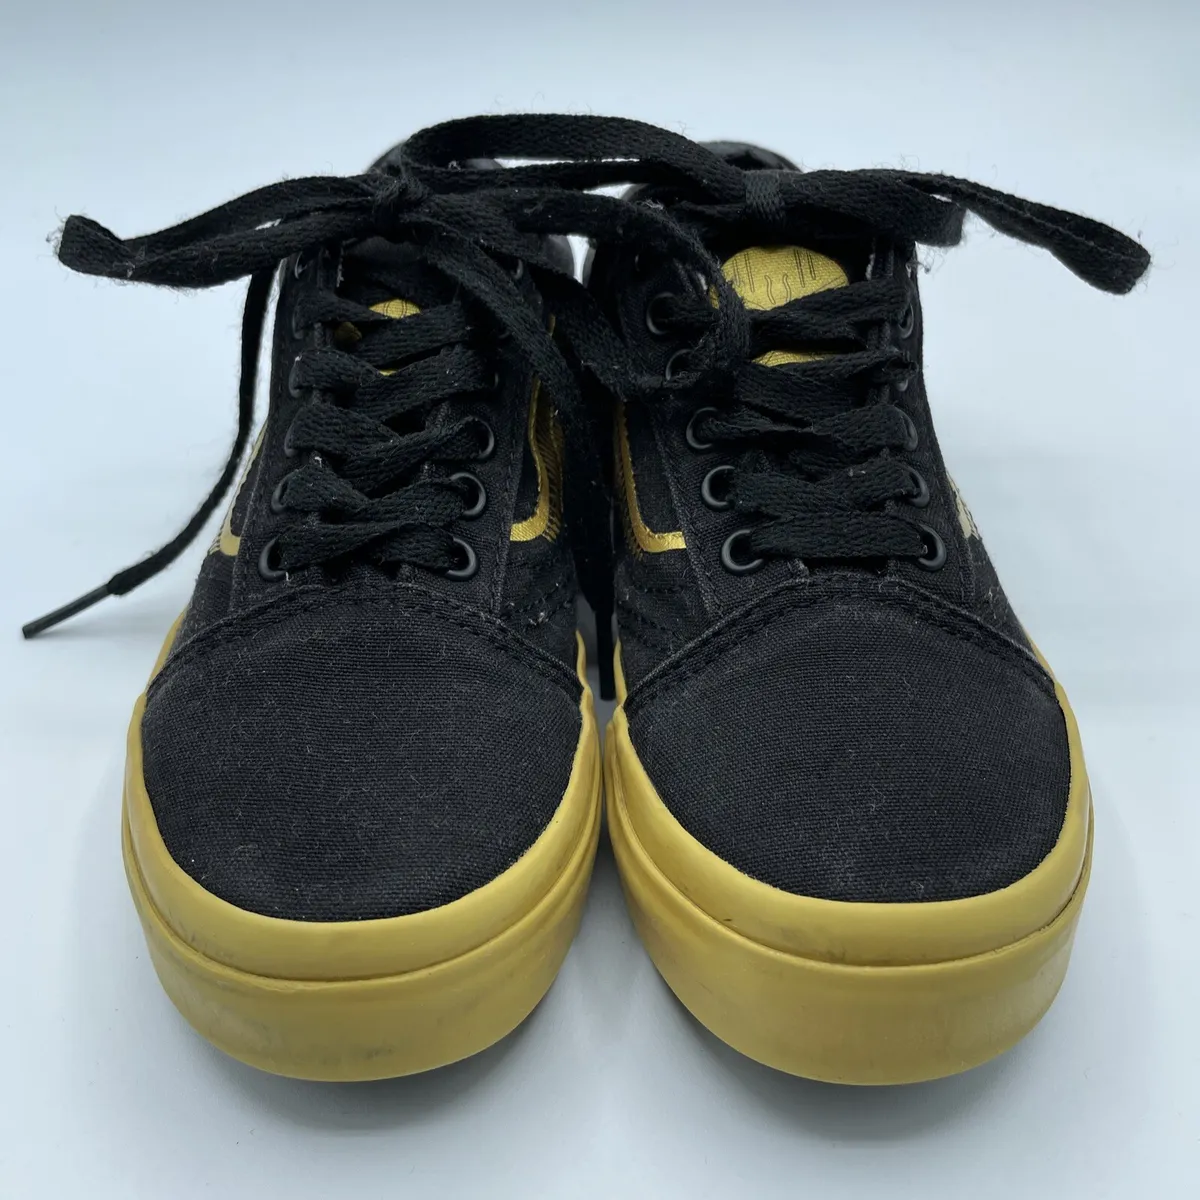 Kids Youth Harry Potter Vans Golden Snitch Black Shoes Size 11 Toddler